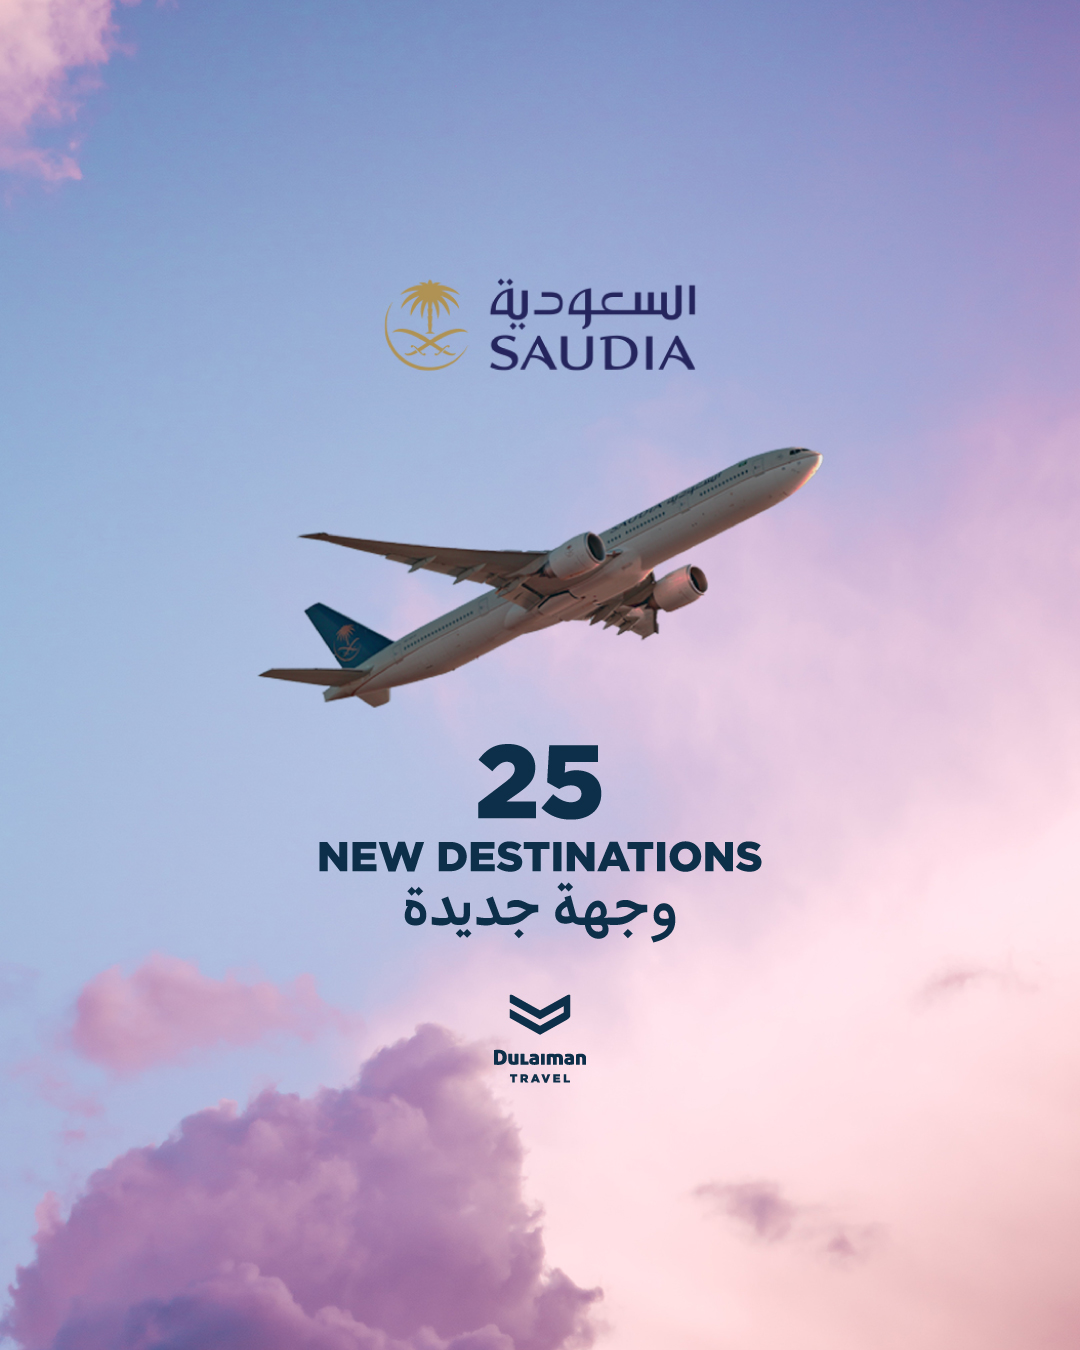 SAUDIA announces major expansion, adds 25 new destinations